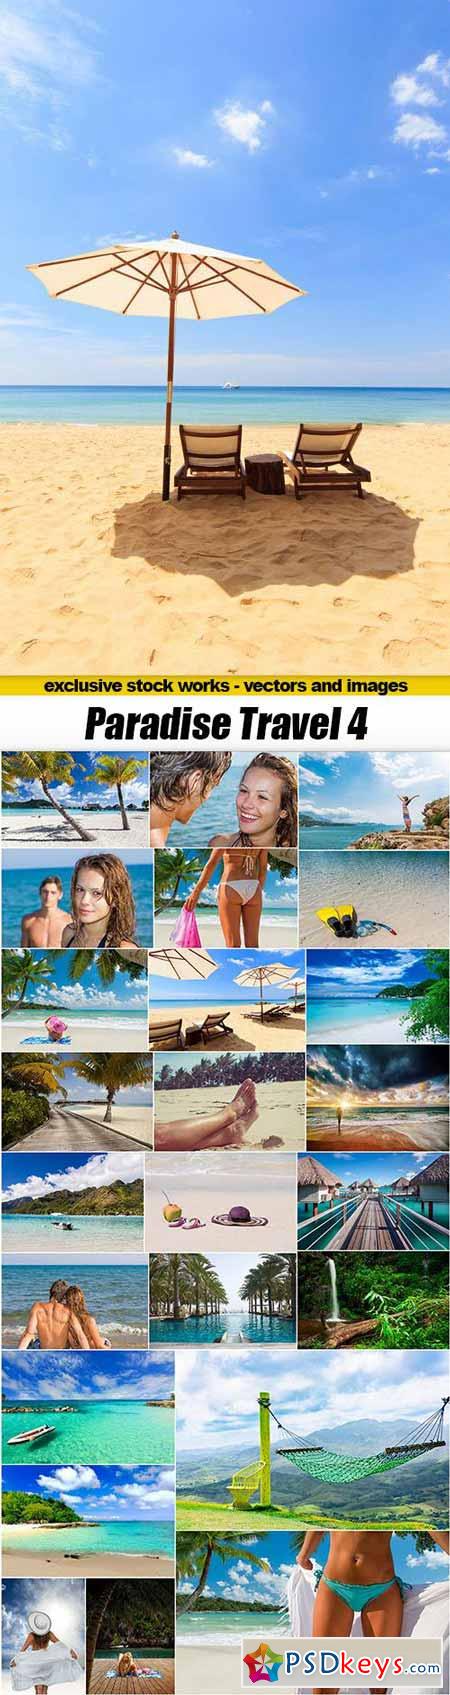 Paradise Travel 4 - 25xUHQ JPEG